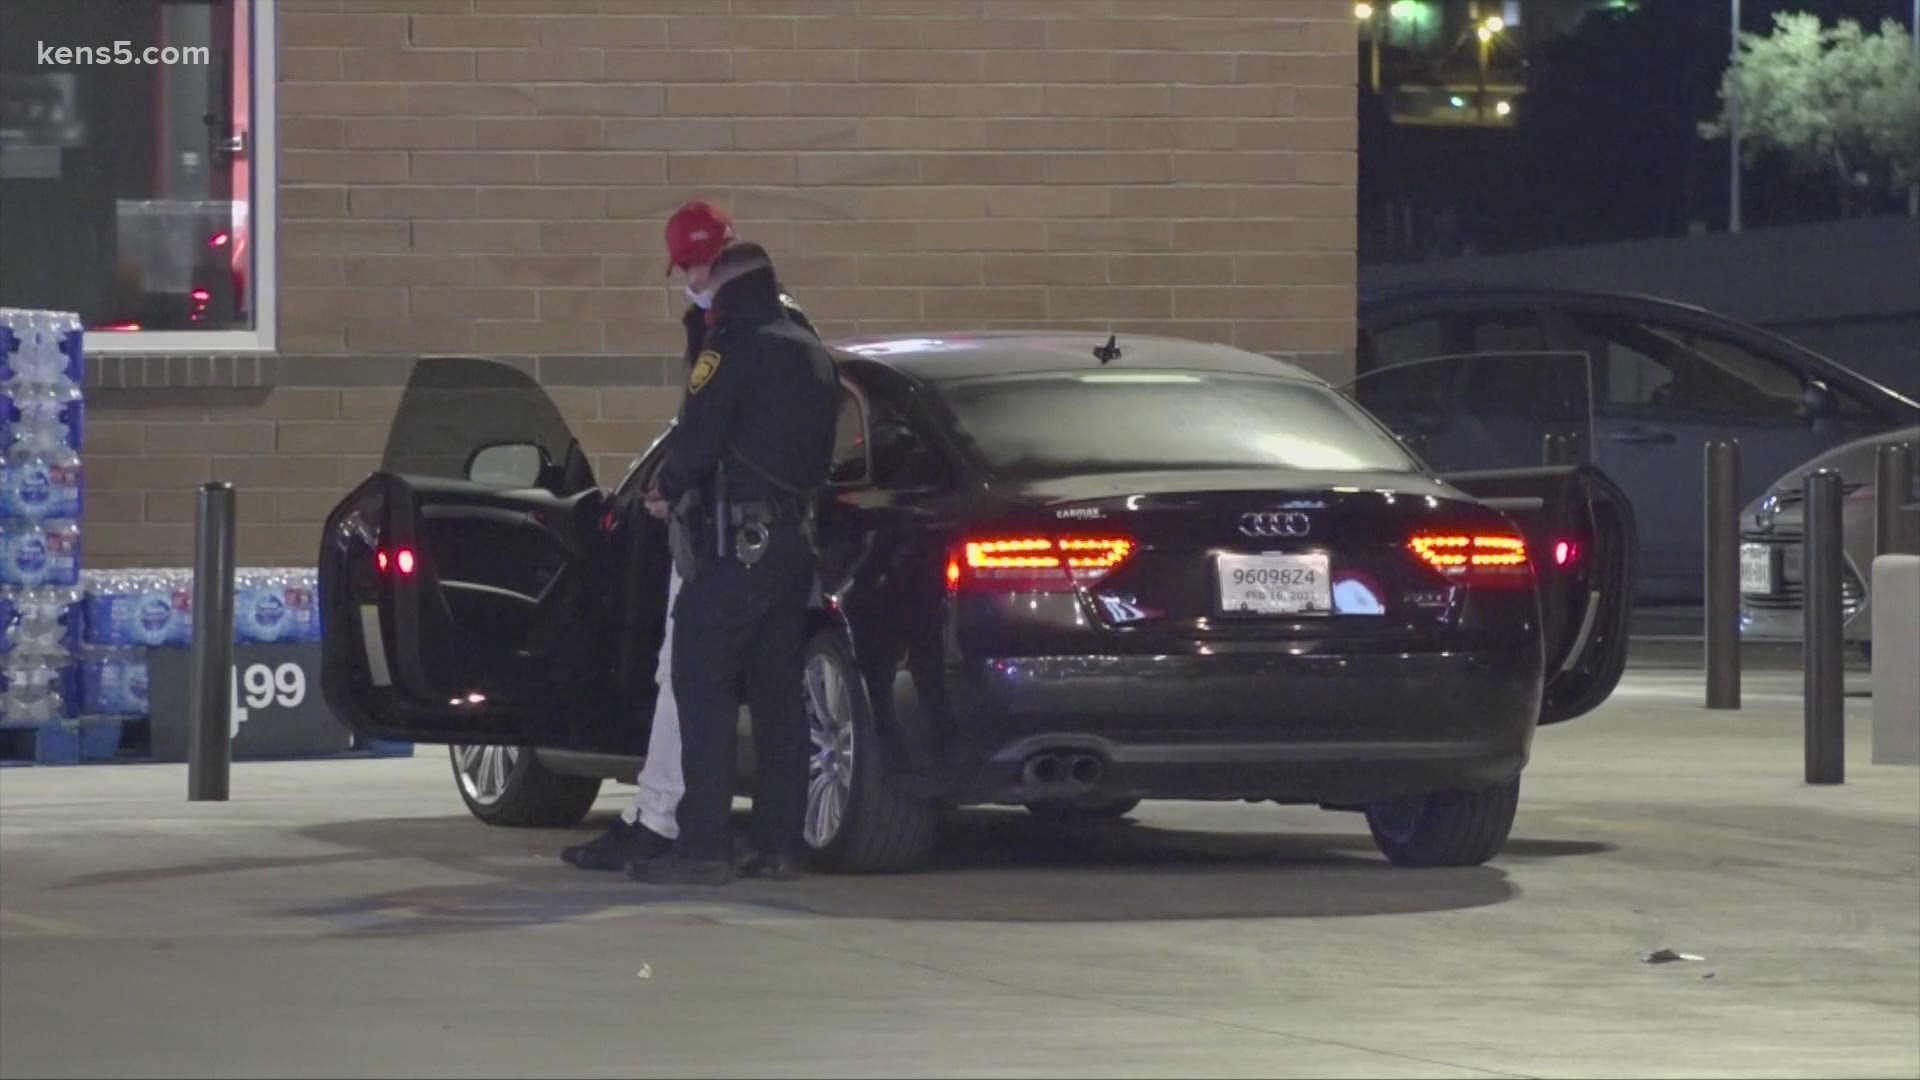 A man's car was stolen, then the men who stole the car returned, demanding money, the San Antonio Police Department said.